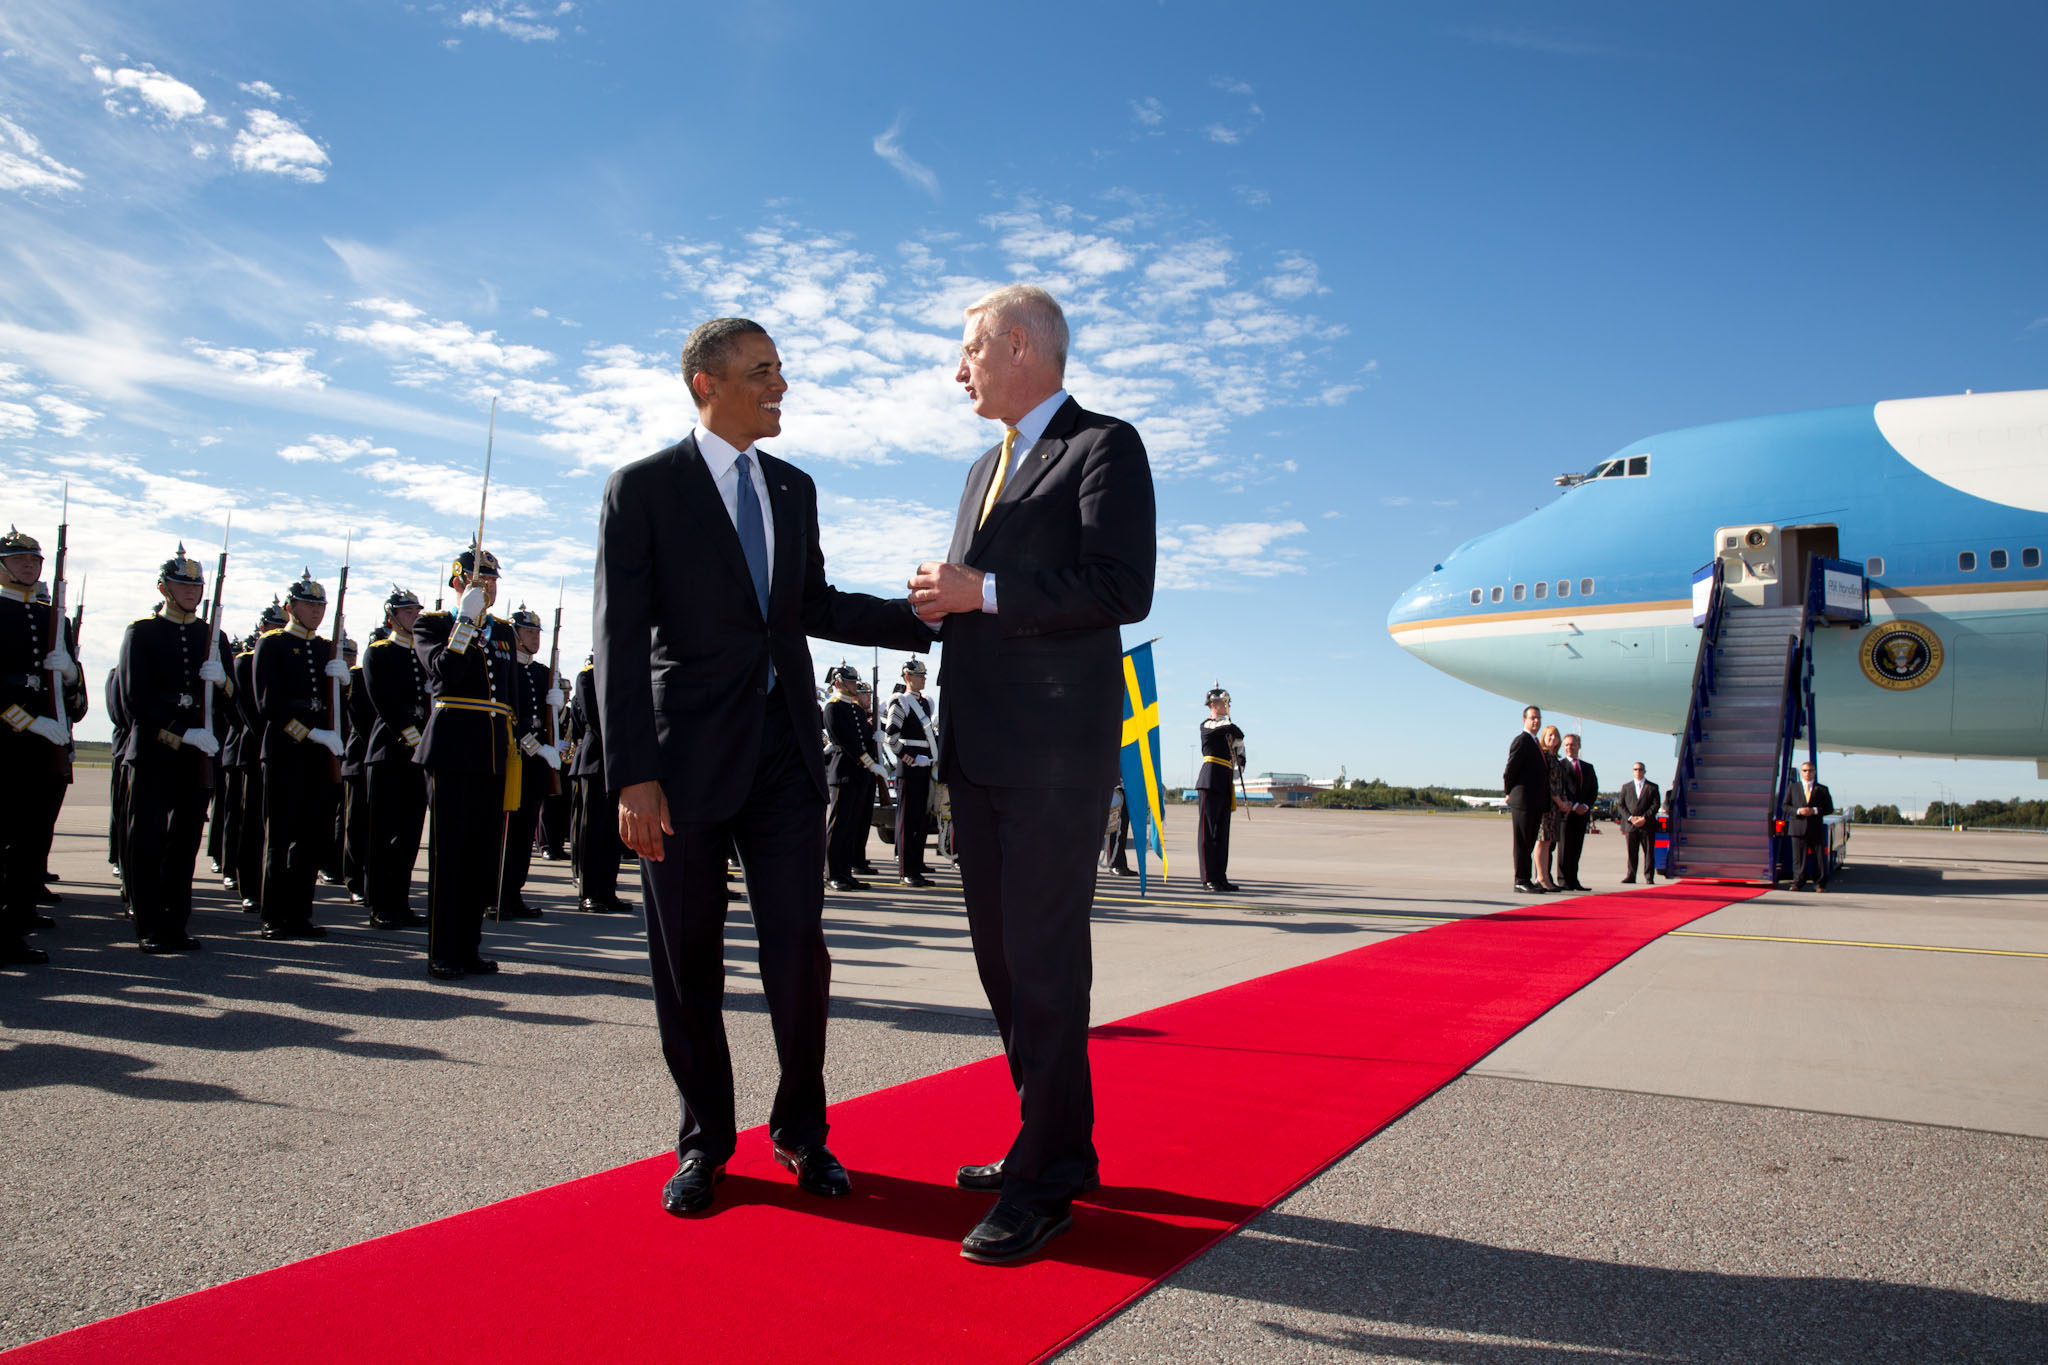 President Barack Obama talks with Foreign Minister Carl Bildt of Sweden during the arrival ceremony at Stockholm-Arlanda International Airport in Sweden